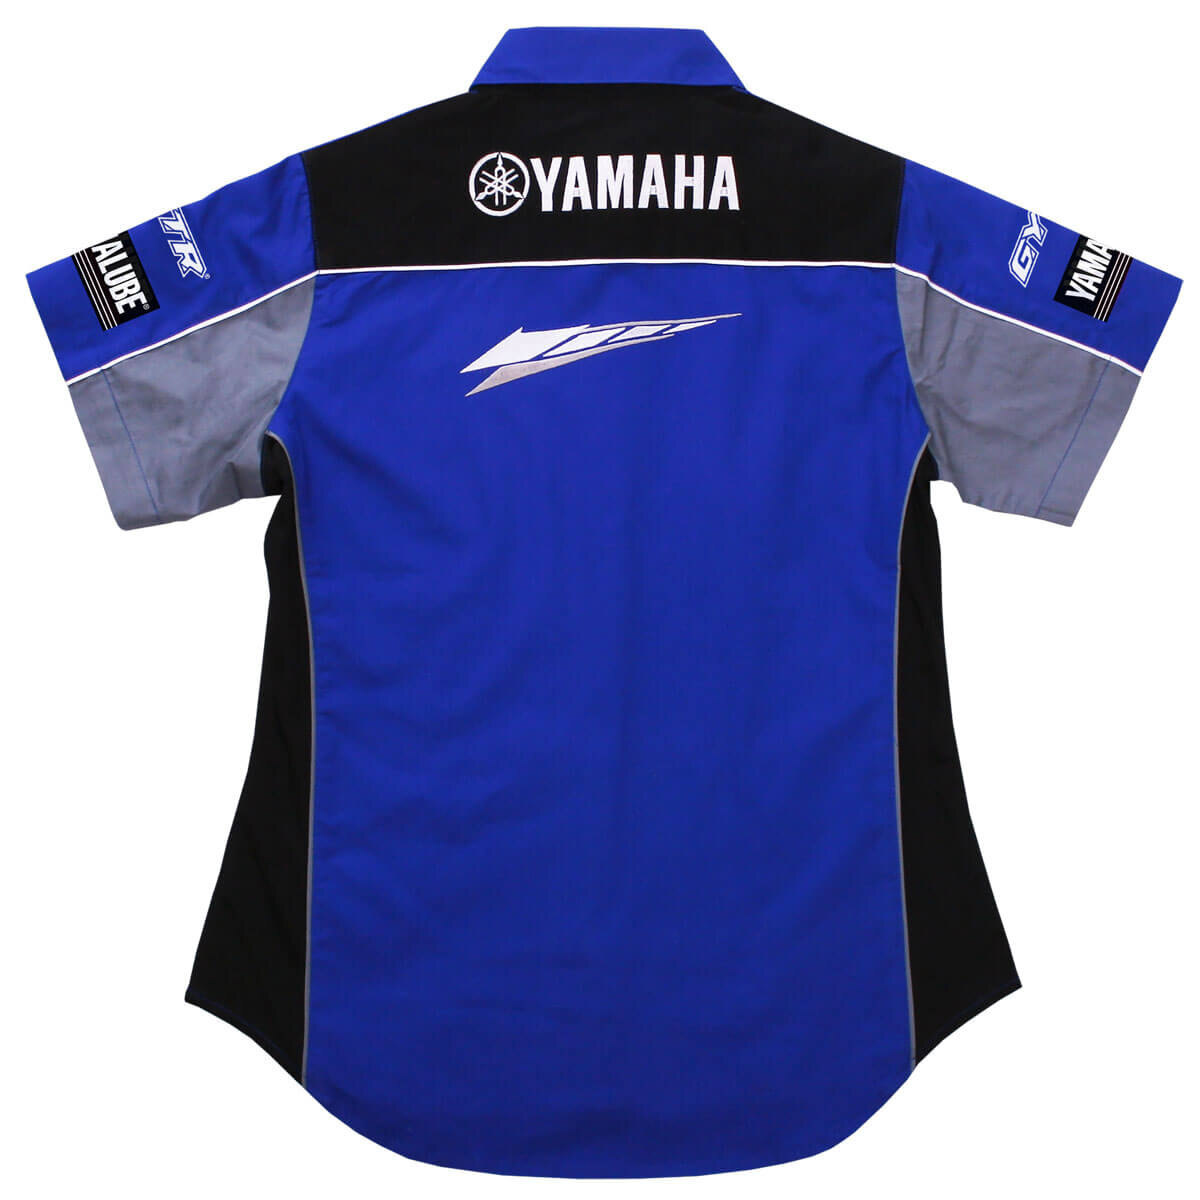 Women's Yamaha Racing Pit Lane Shirt Small blue/black